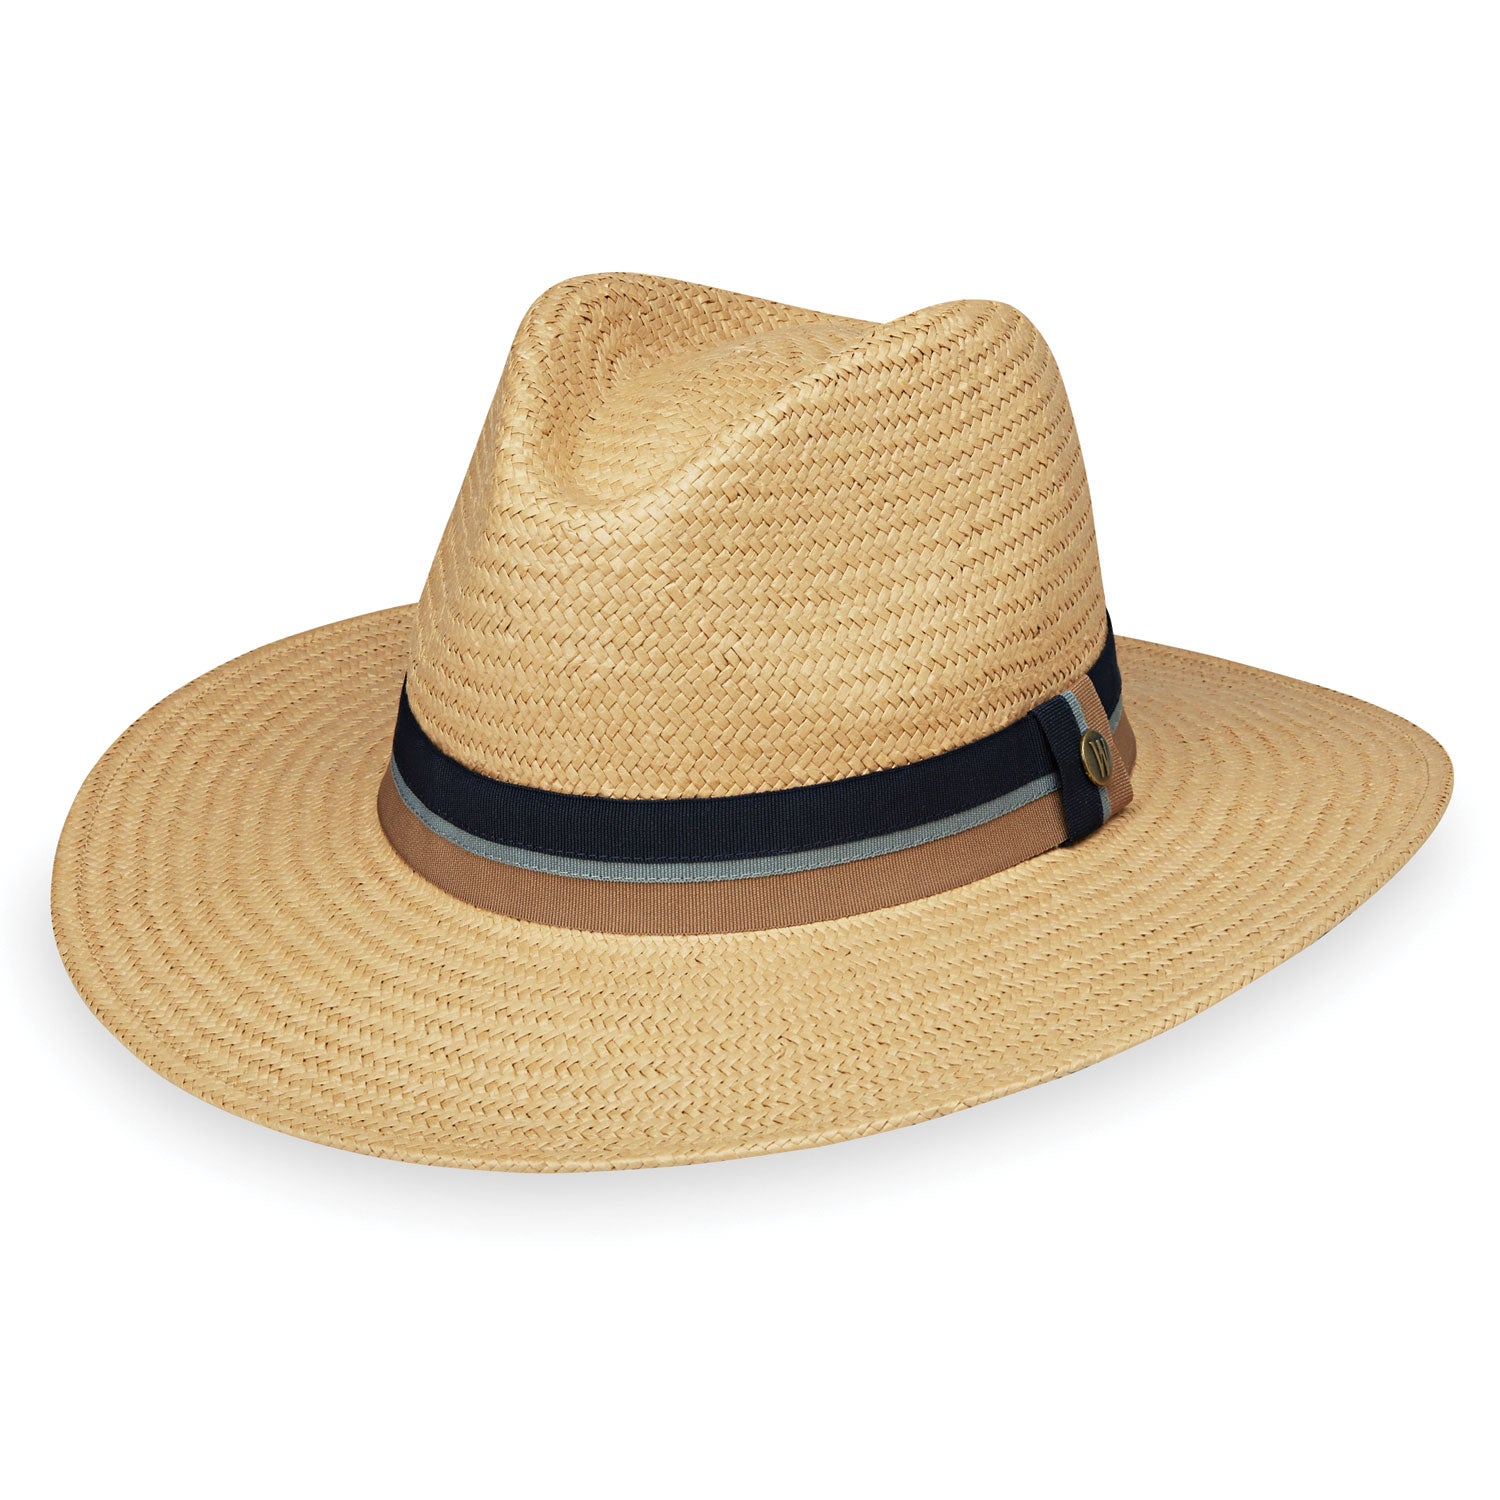 Featuring Men's Big Wide Brim Fedora Style Turner Straw Sun Hat in Camel from Wallaroo